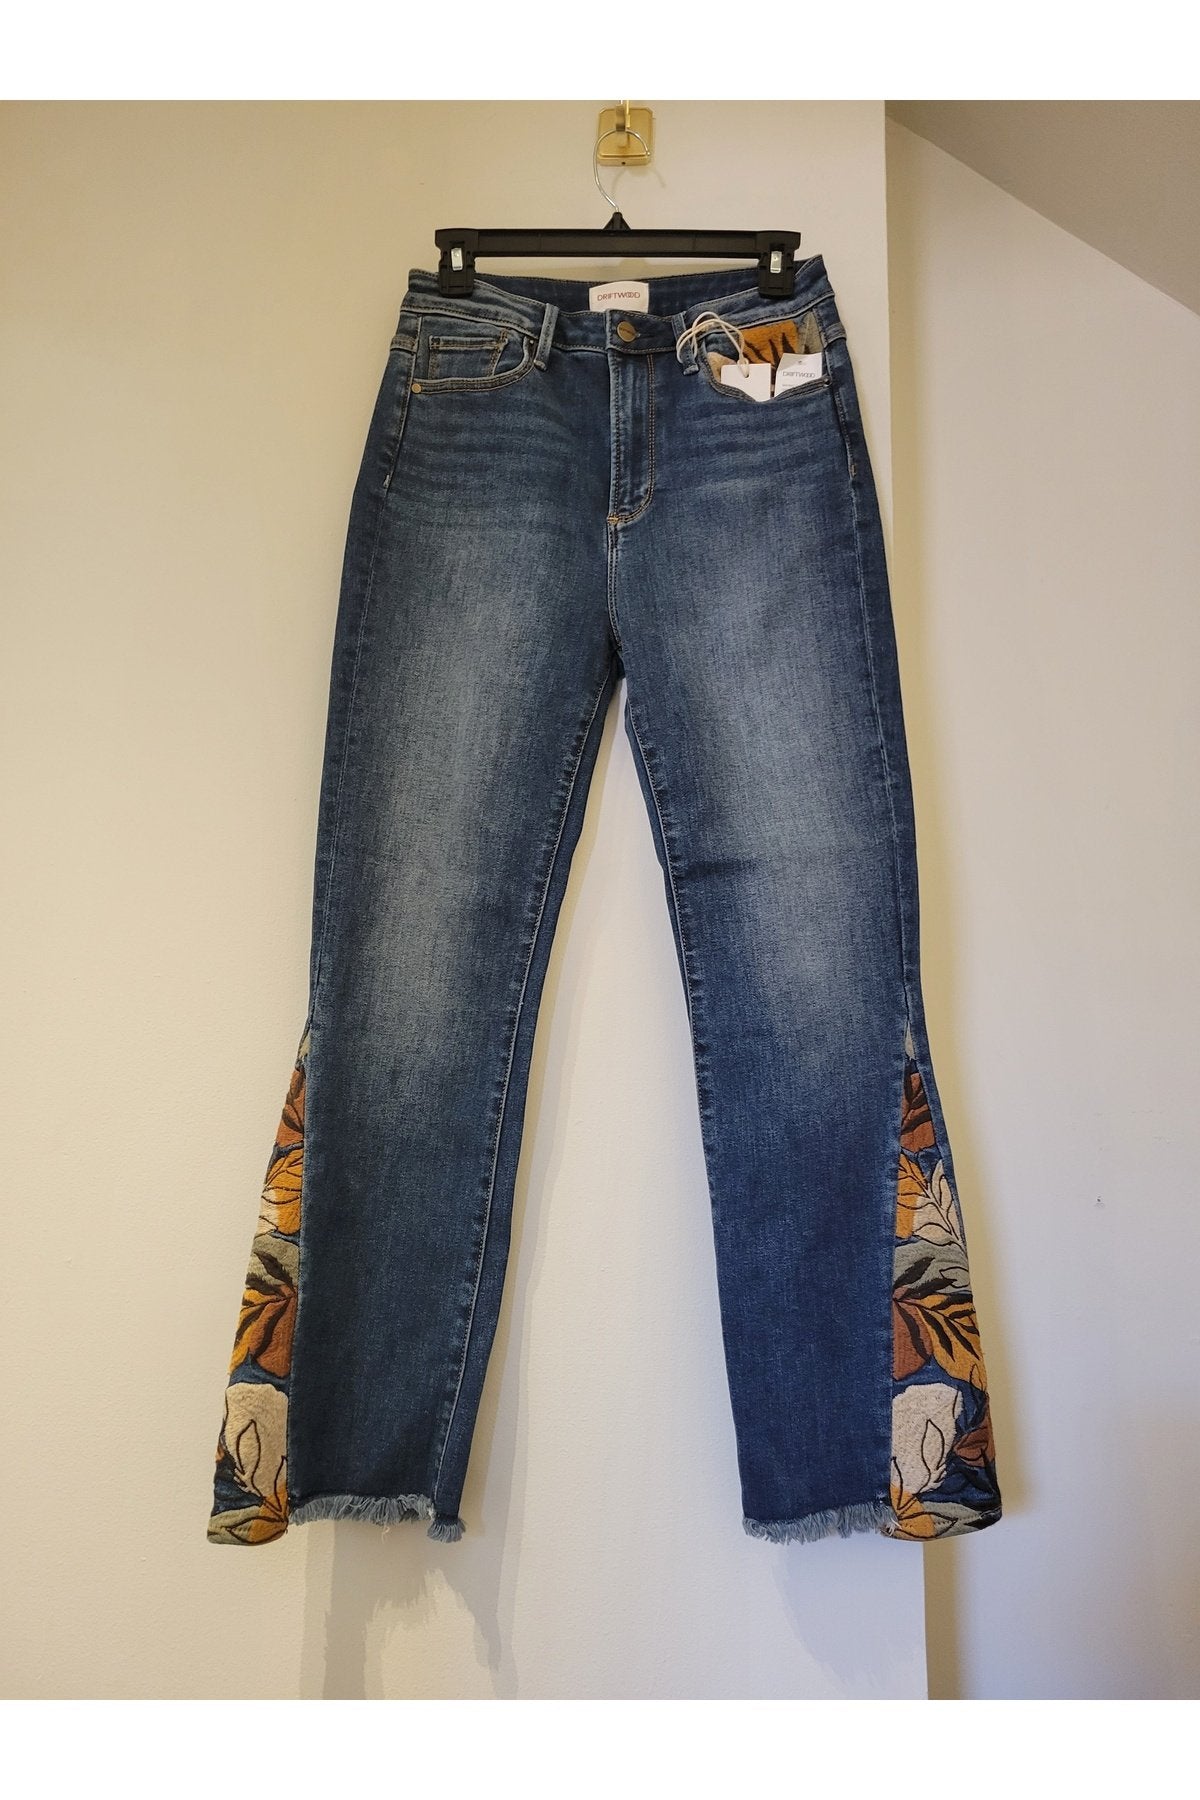 Driftwood Clara x Surreal Jeans